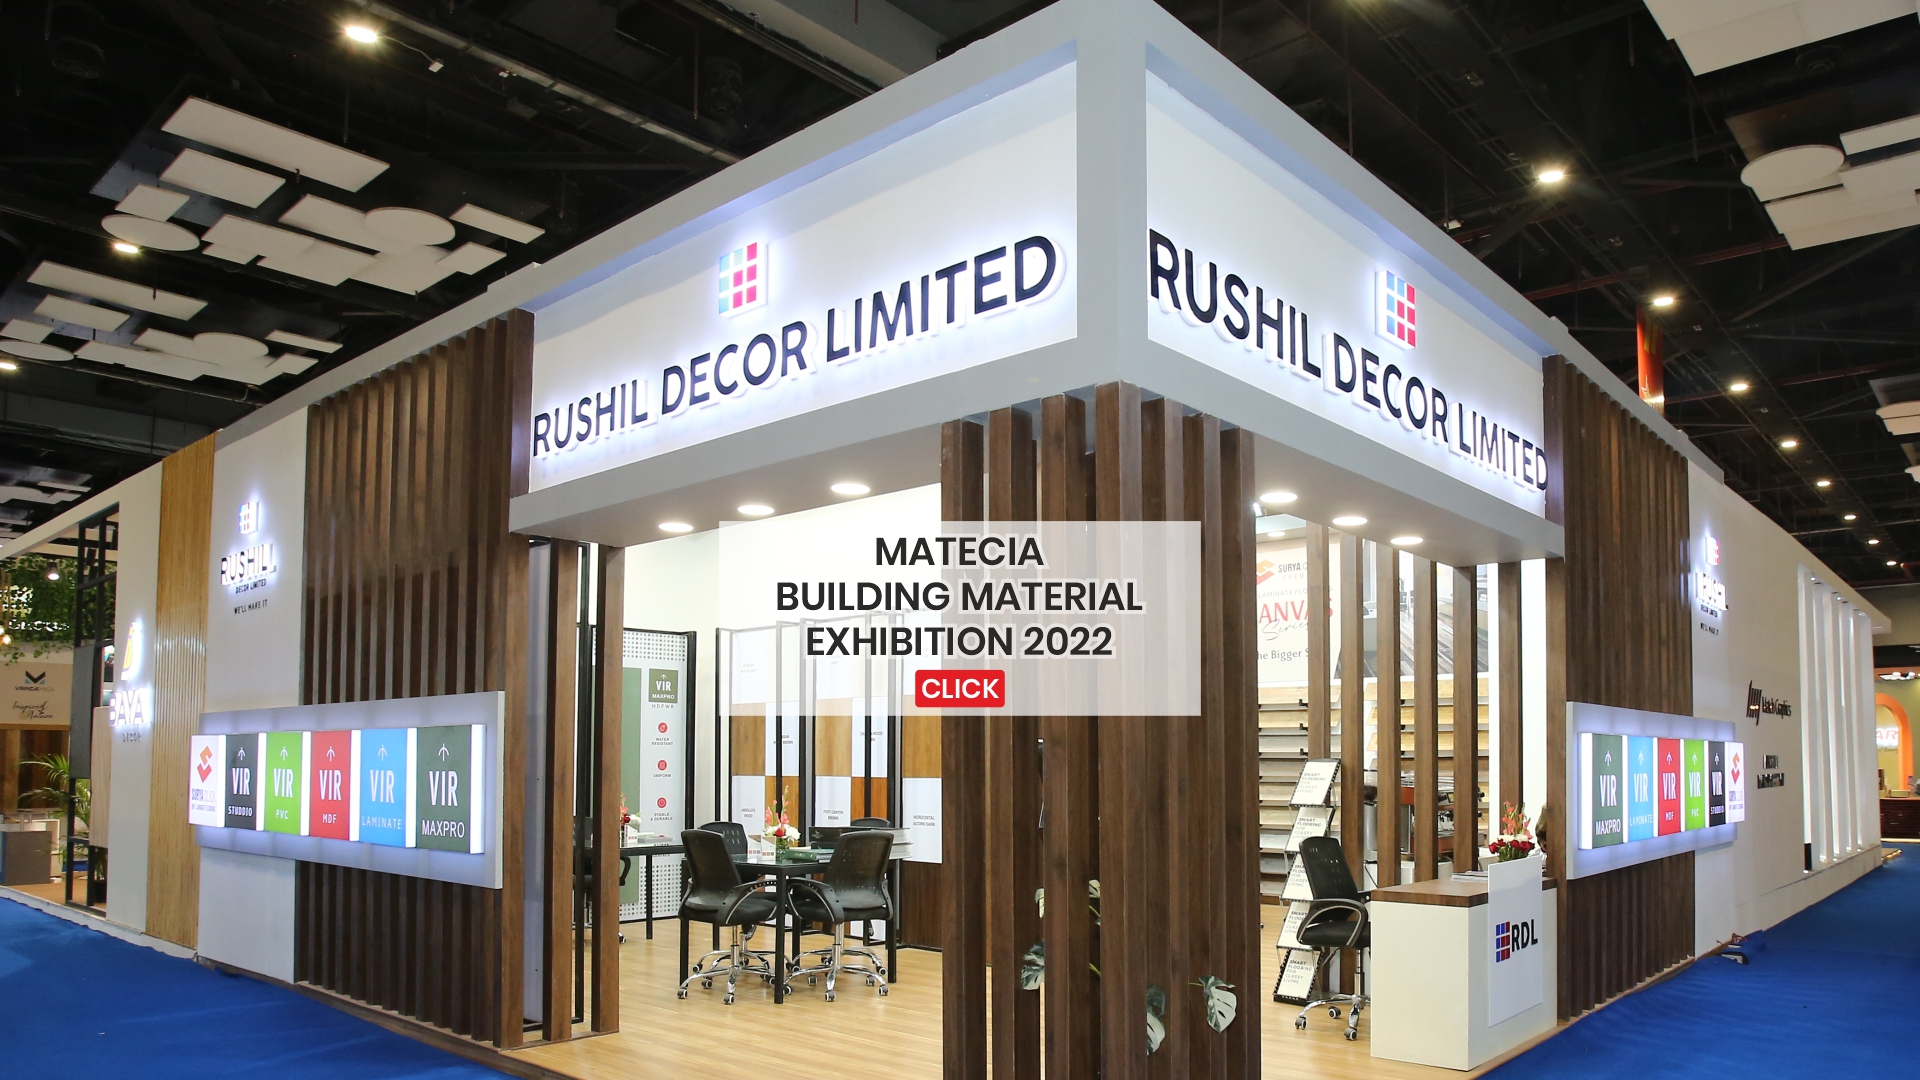 Matecia Building Material Exhibition